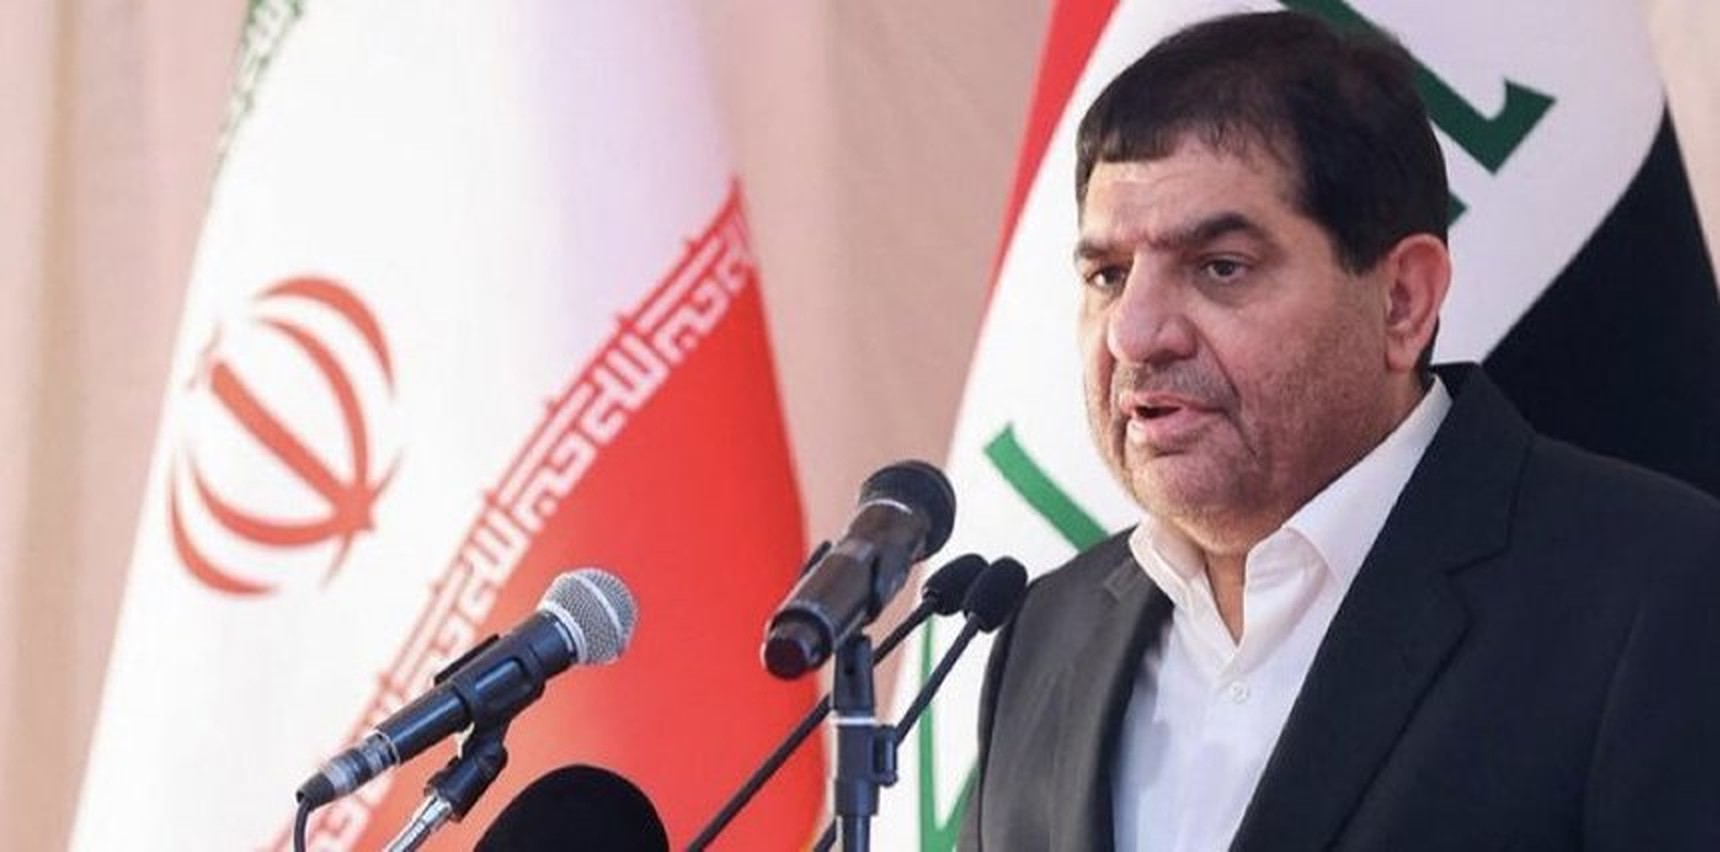 Mohammad Mokhber, președintele interimar din Iran